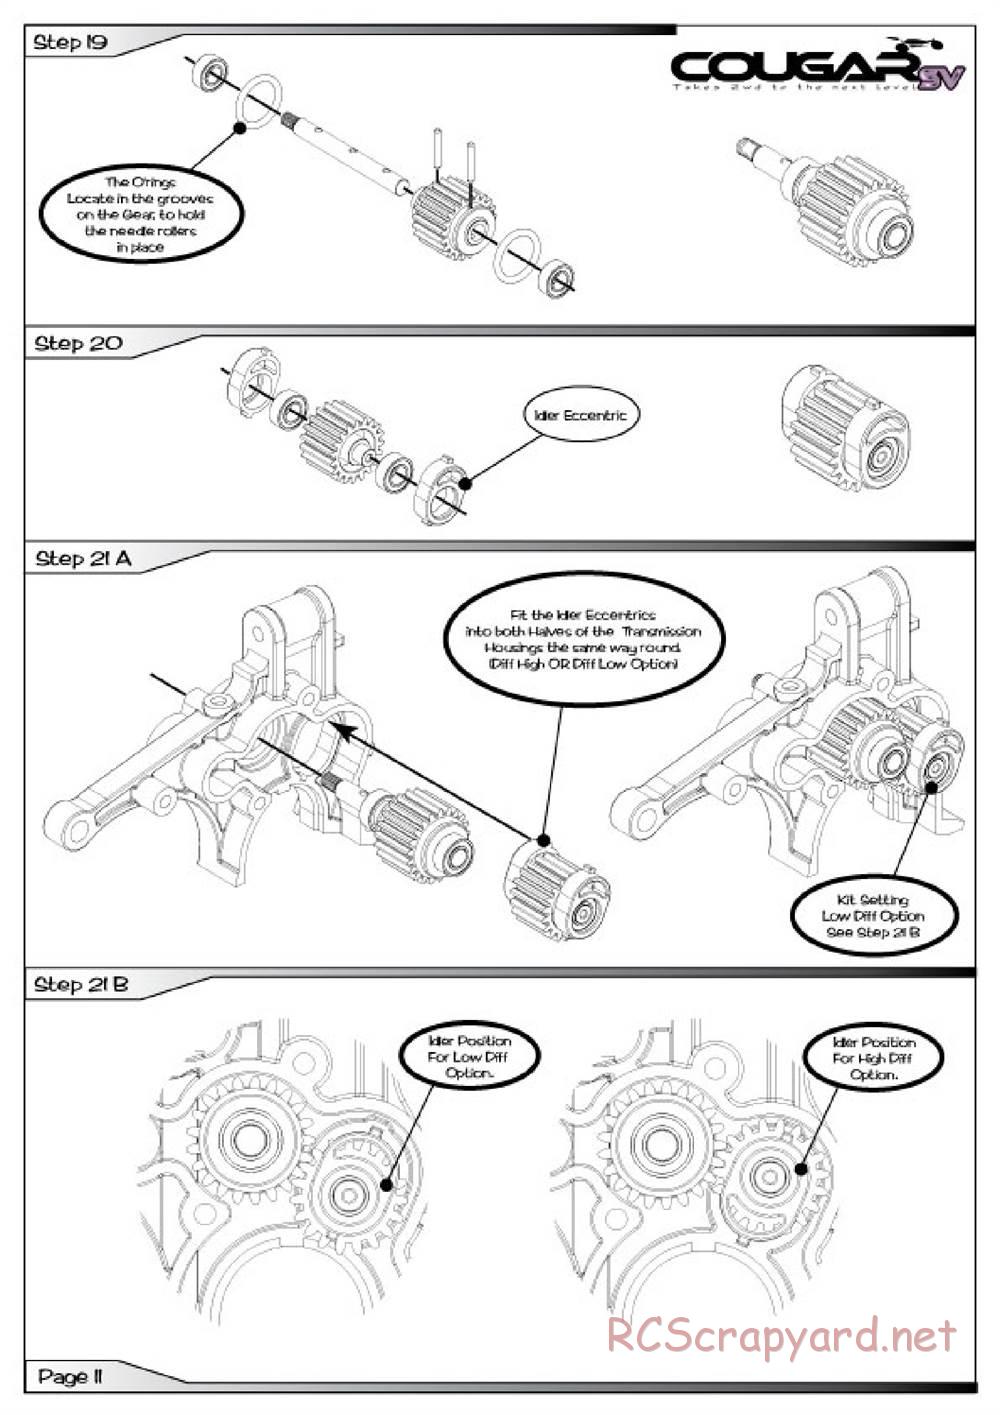 Schumacher - Cougar SV - Manual - Page 12